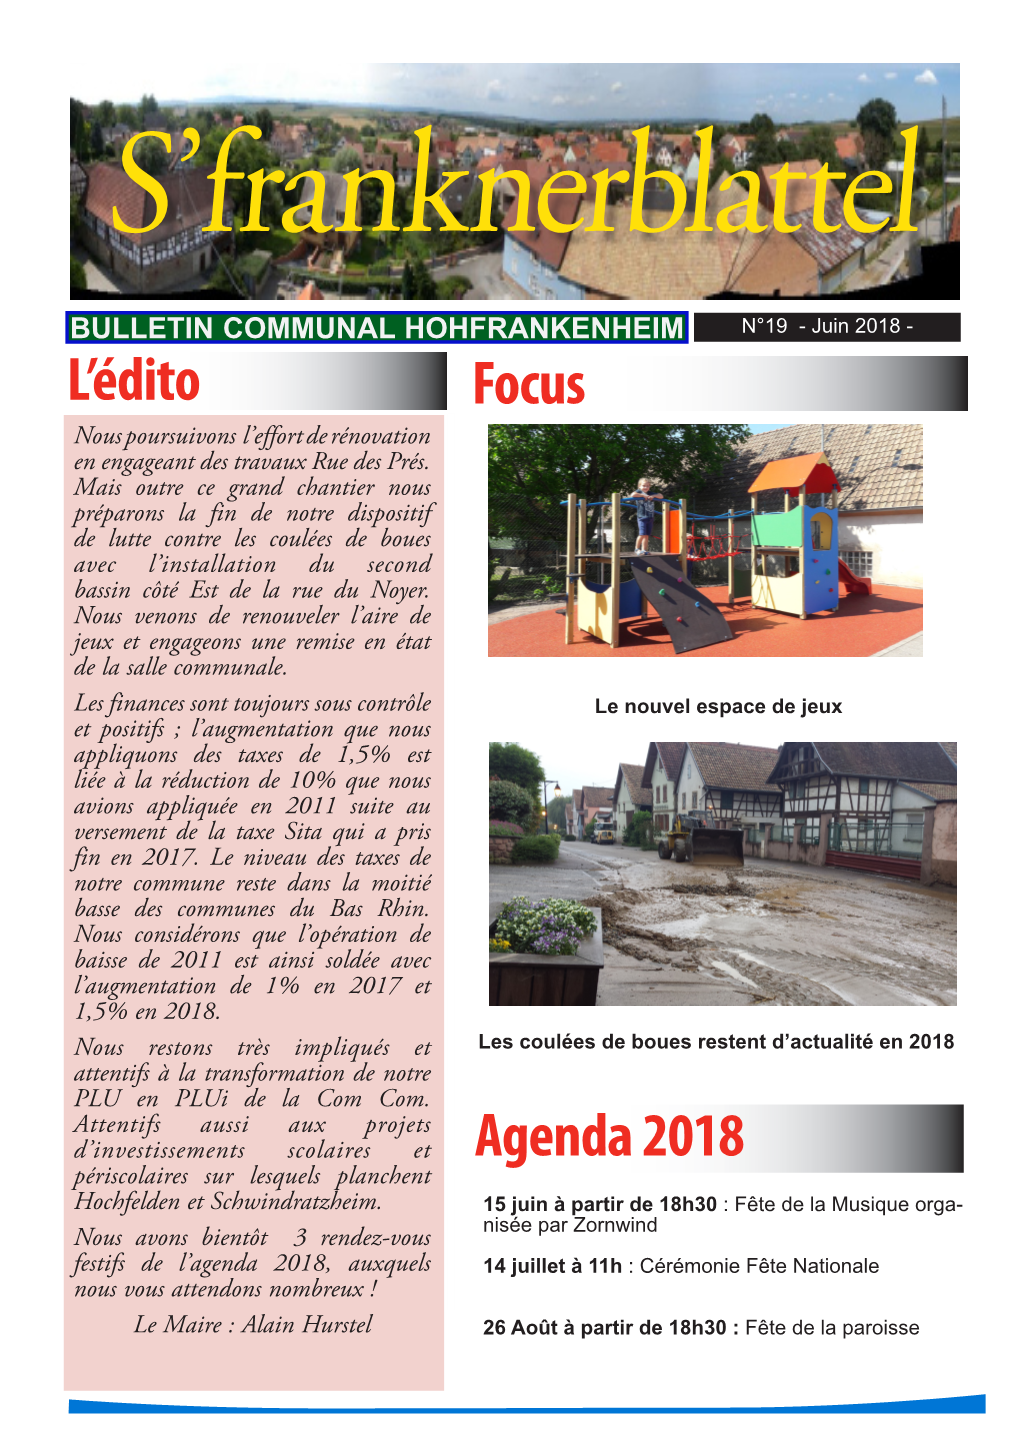 Bulletin D'informations